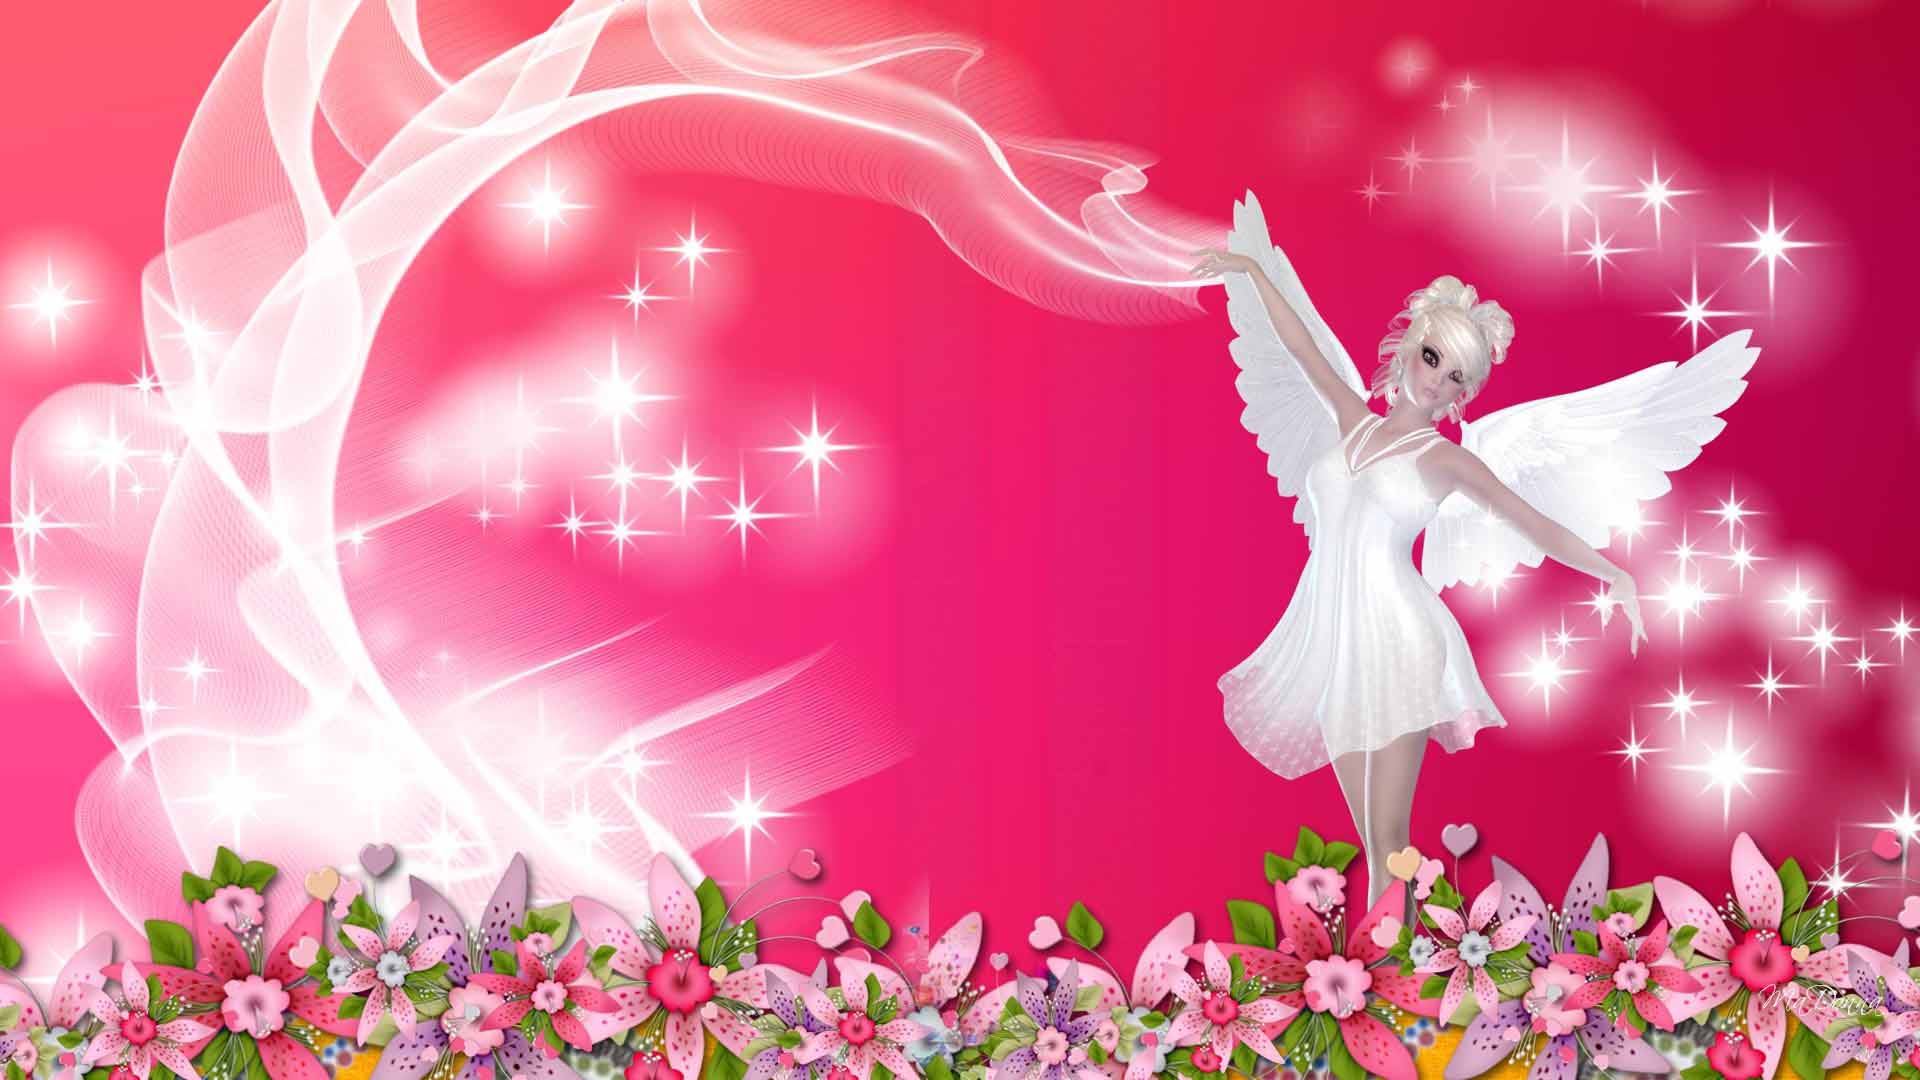 Pink Fairy Wallpaper   Desktop Backgrounds